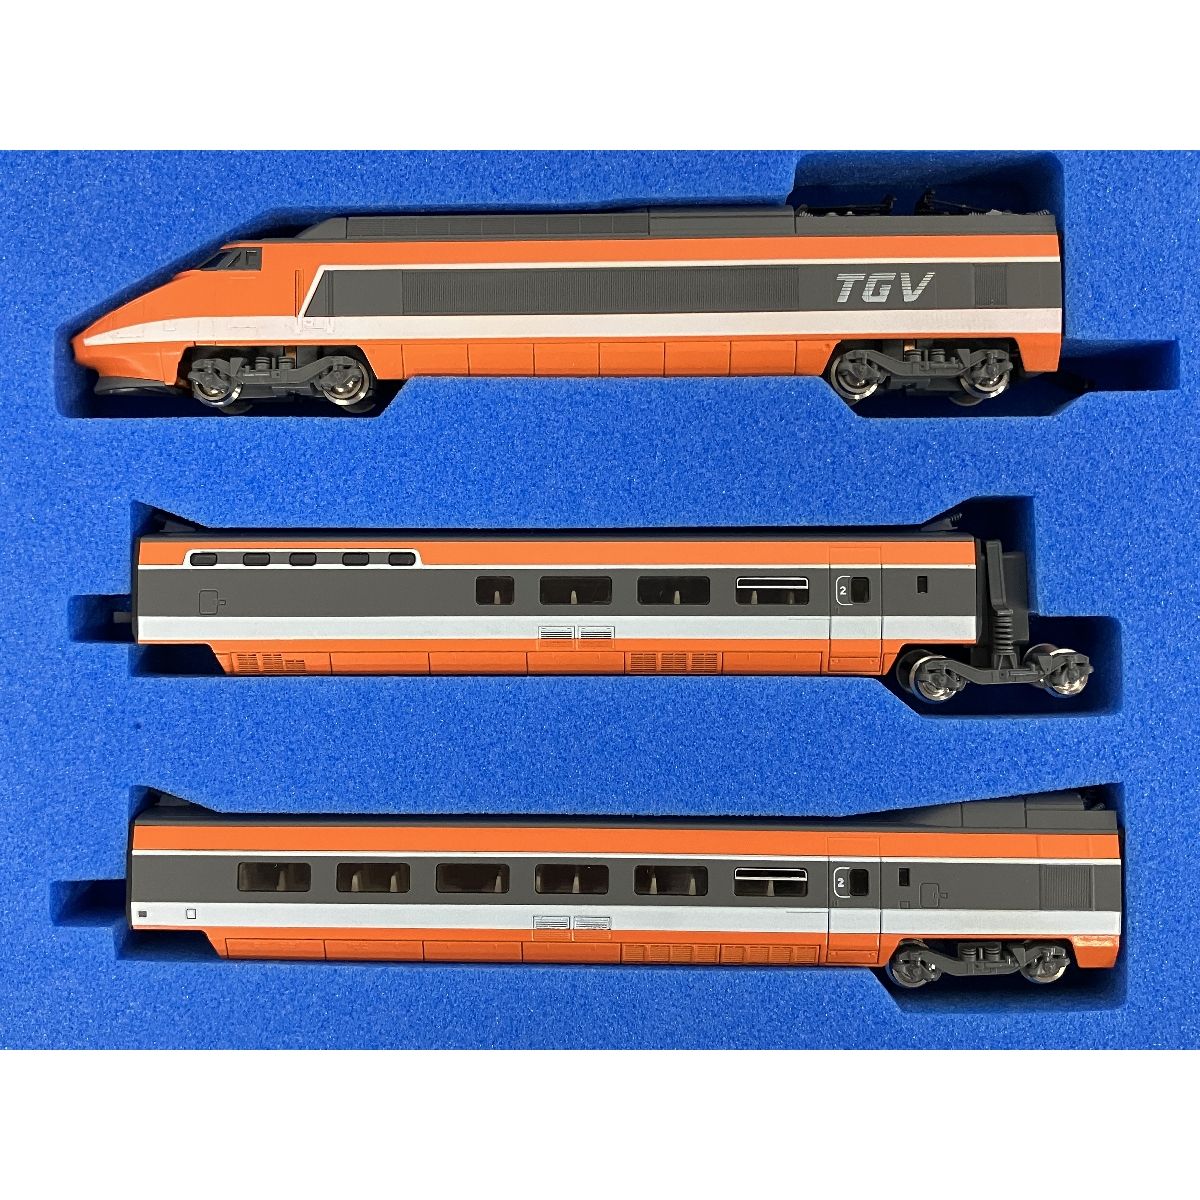 KATO カトー TGV S14701 フランス国鉄 海外車両 6両セット Nゲージ 鉄道模型 中古 S9056492 - メルカリ